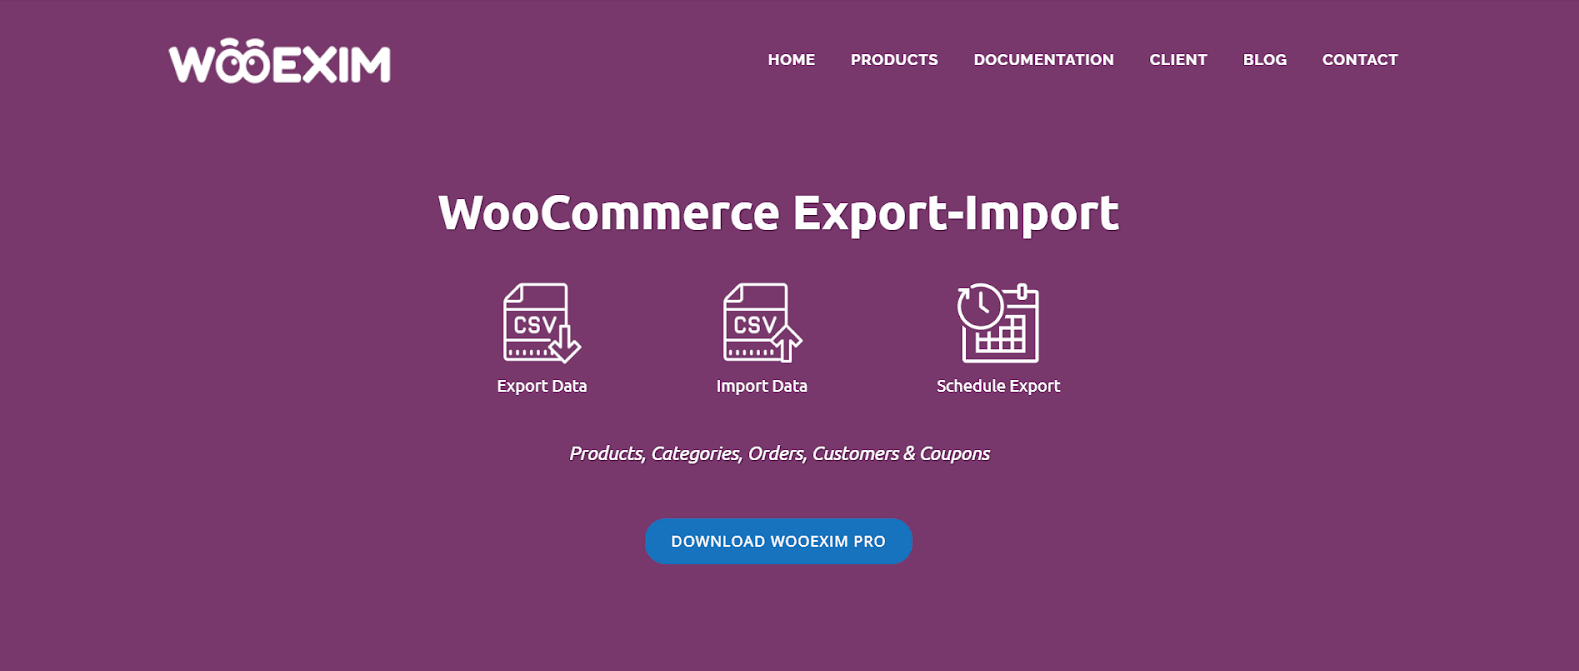 WOOEXIM – WooCommerce Export Import Plugin Pro